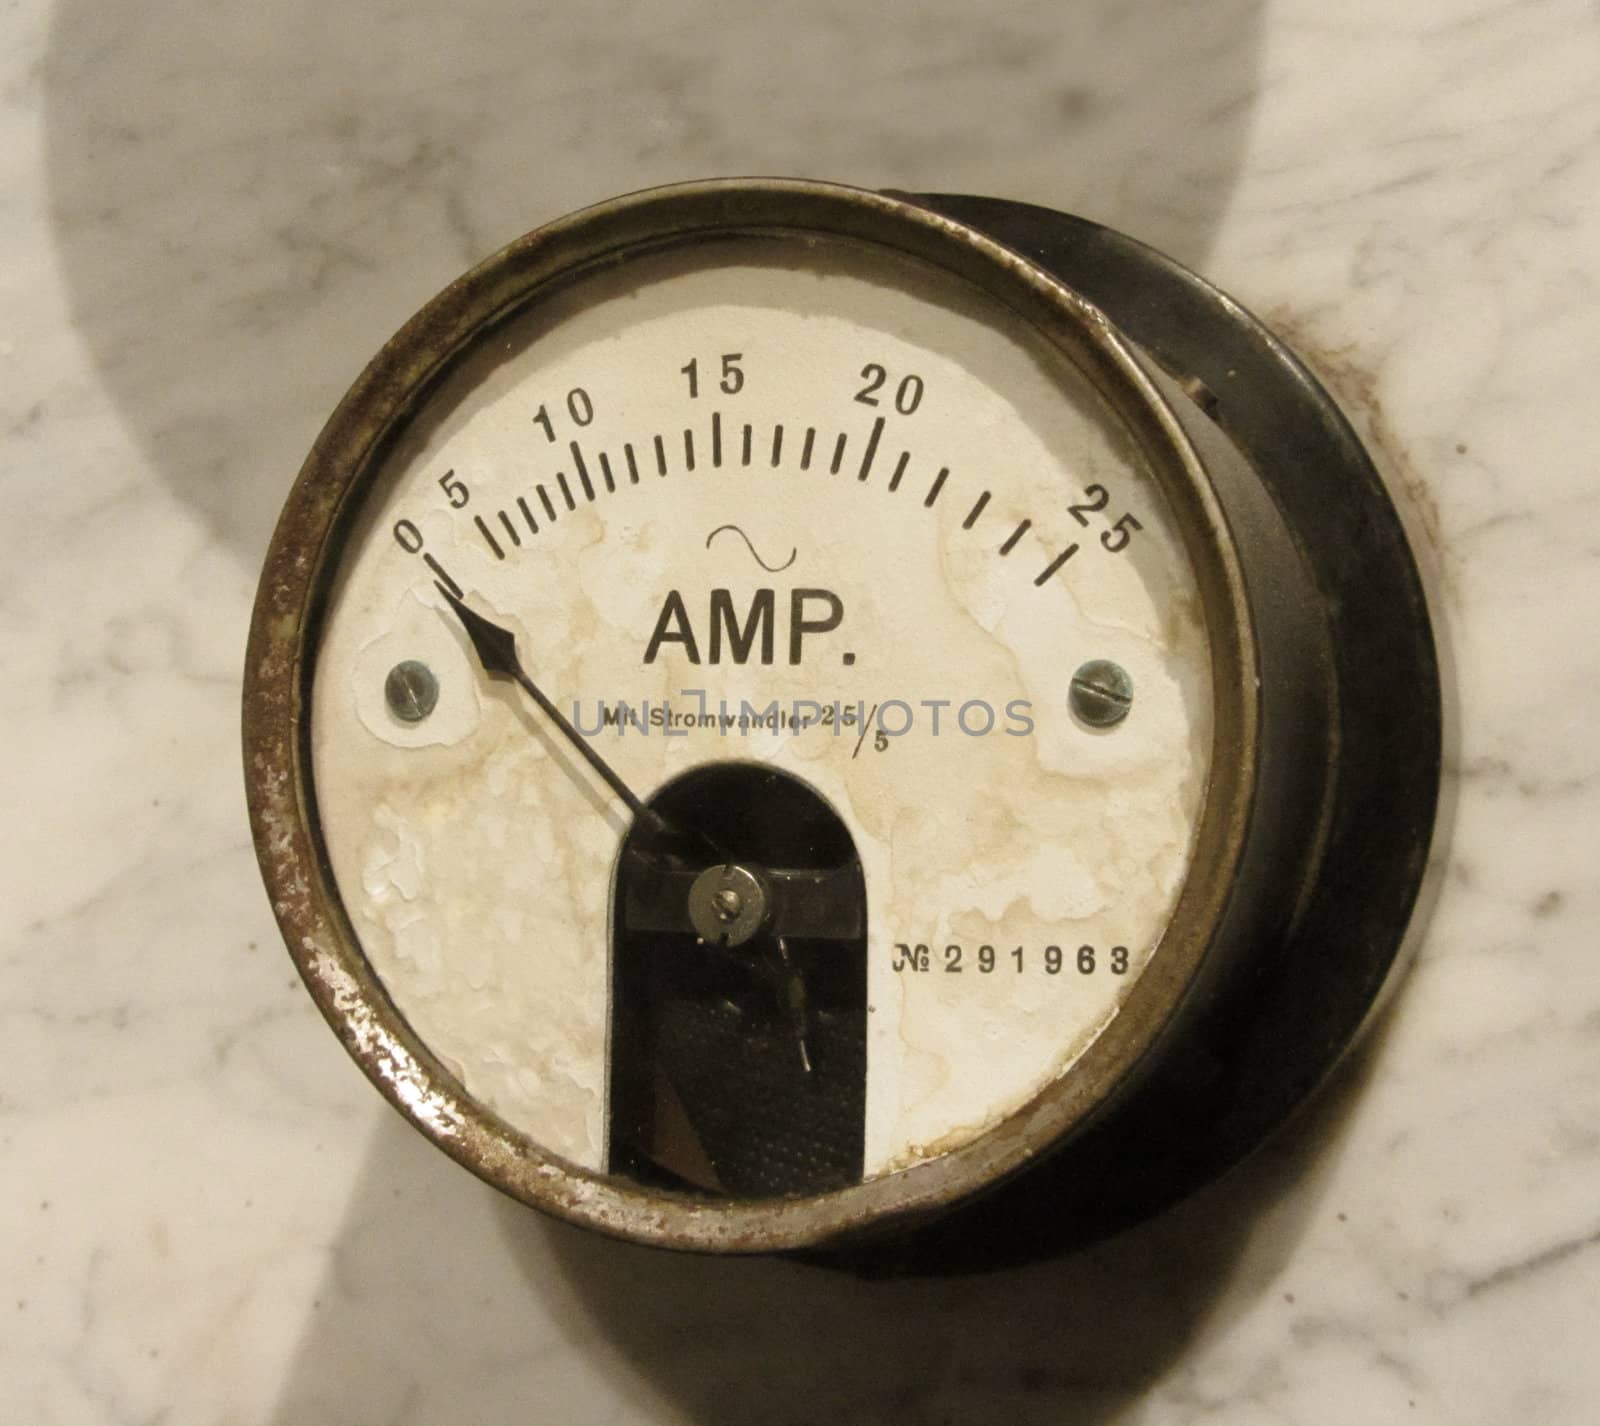 Vintage amper-meter closeup, old electric instrument technology